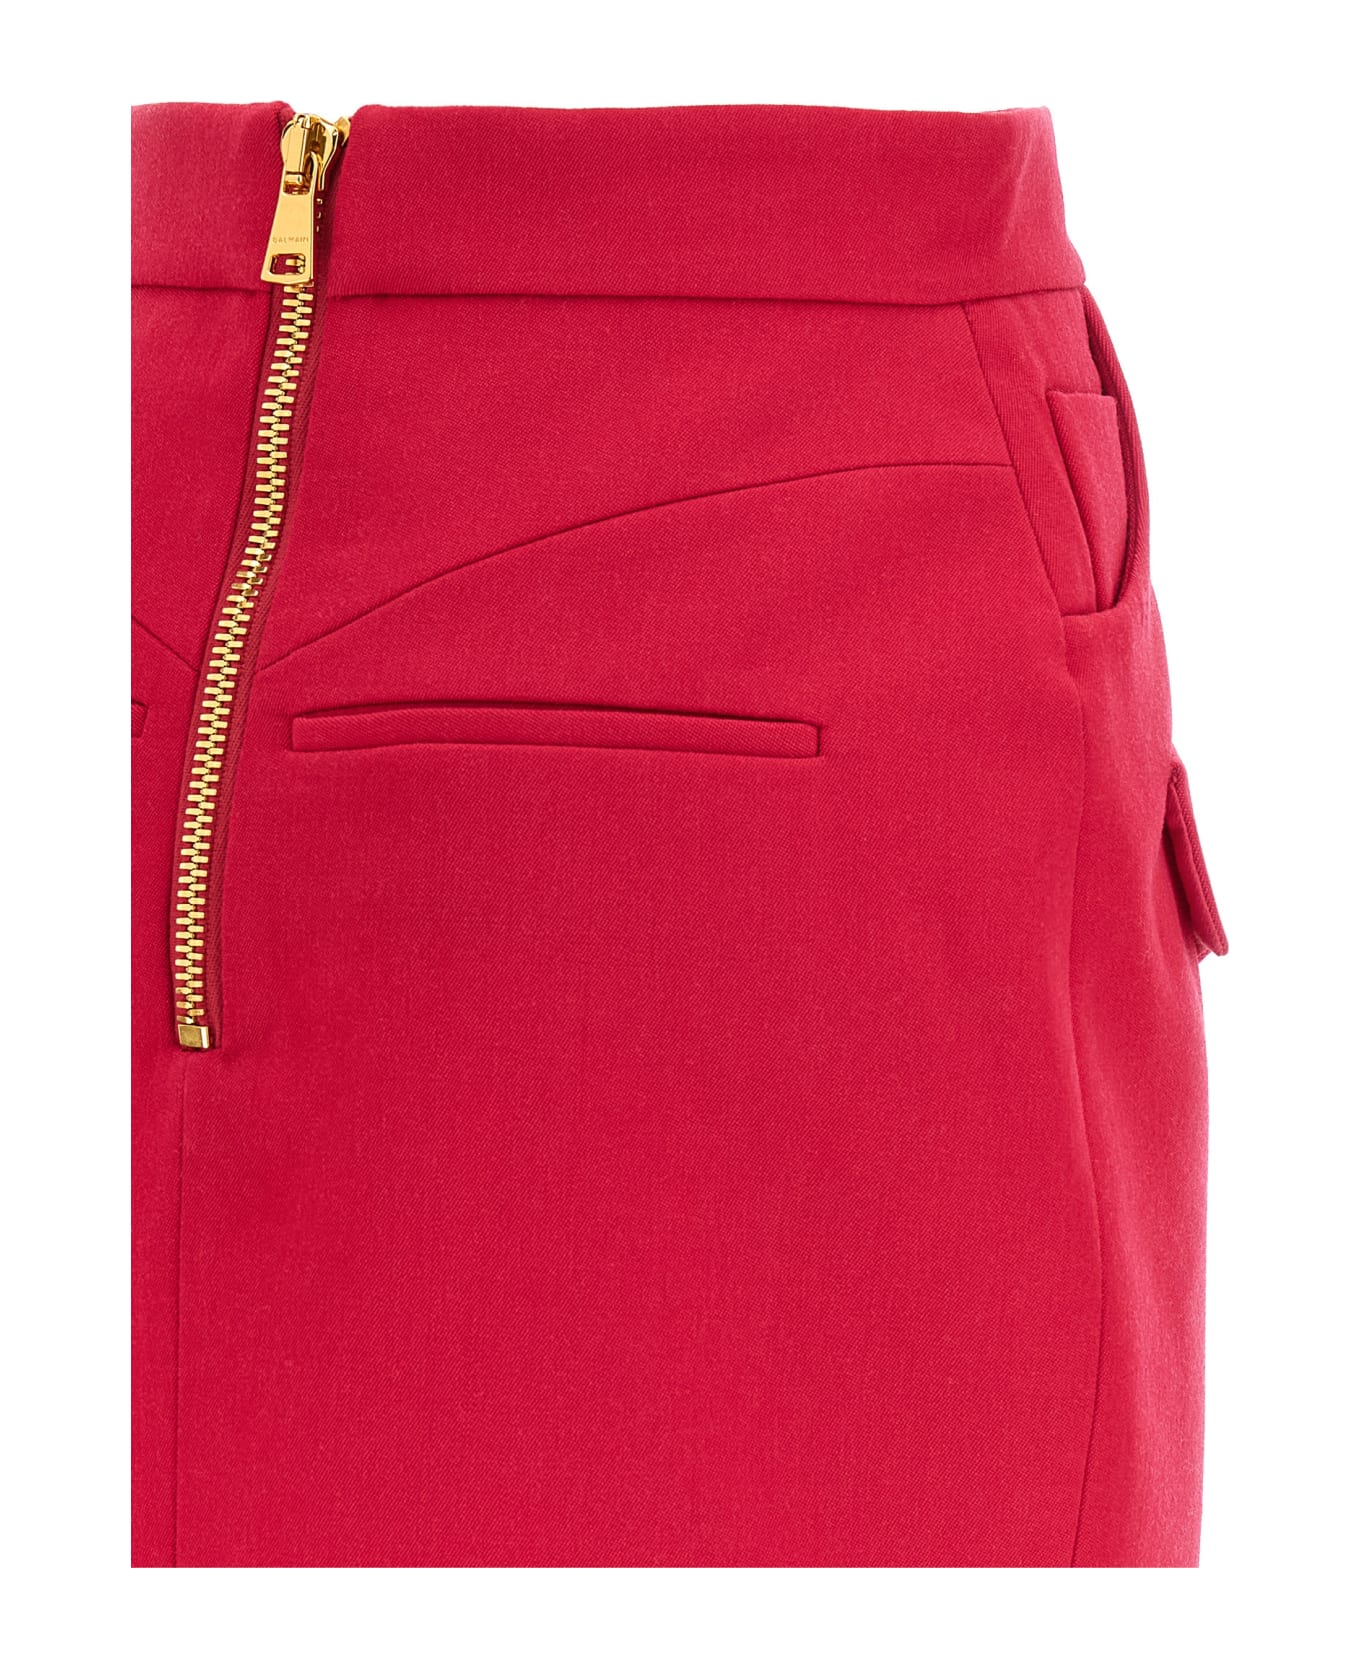 Balmain Mini Skirt - Fuchsia スカート